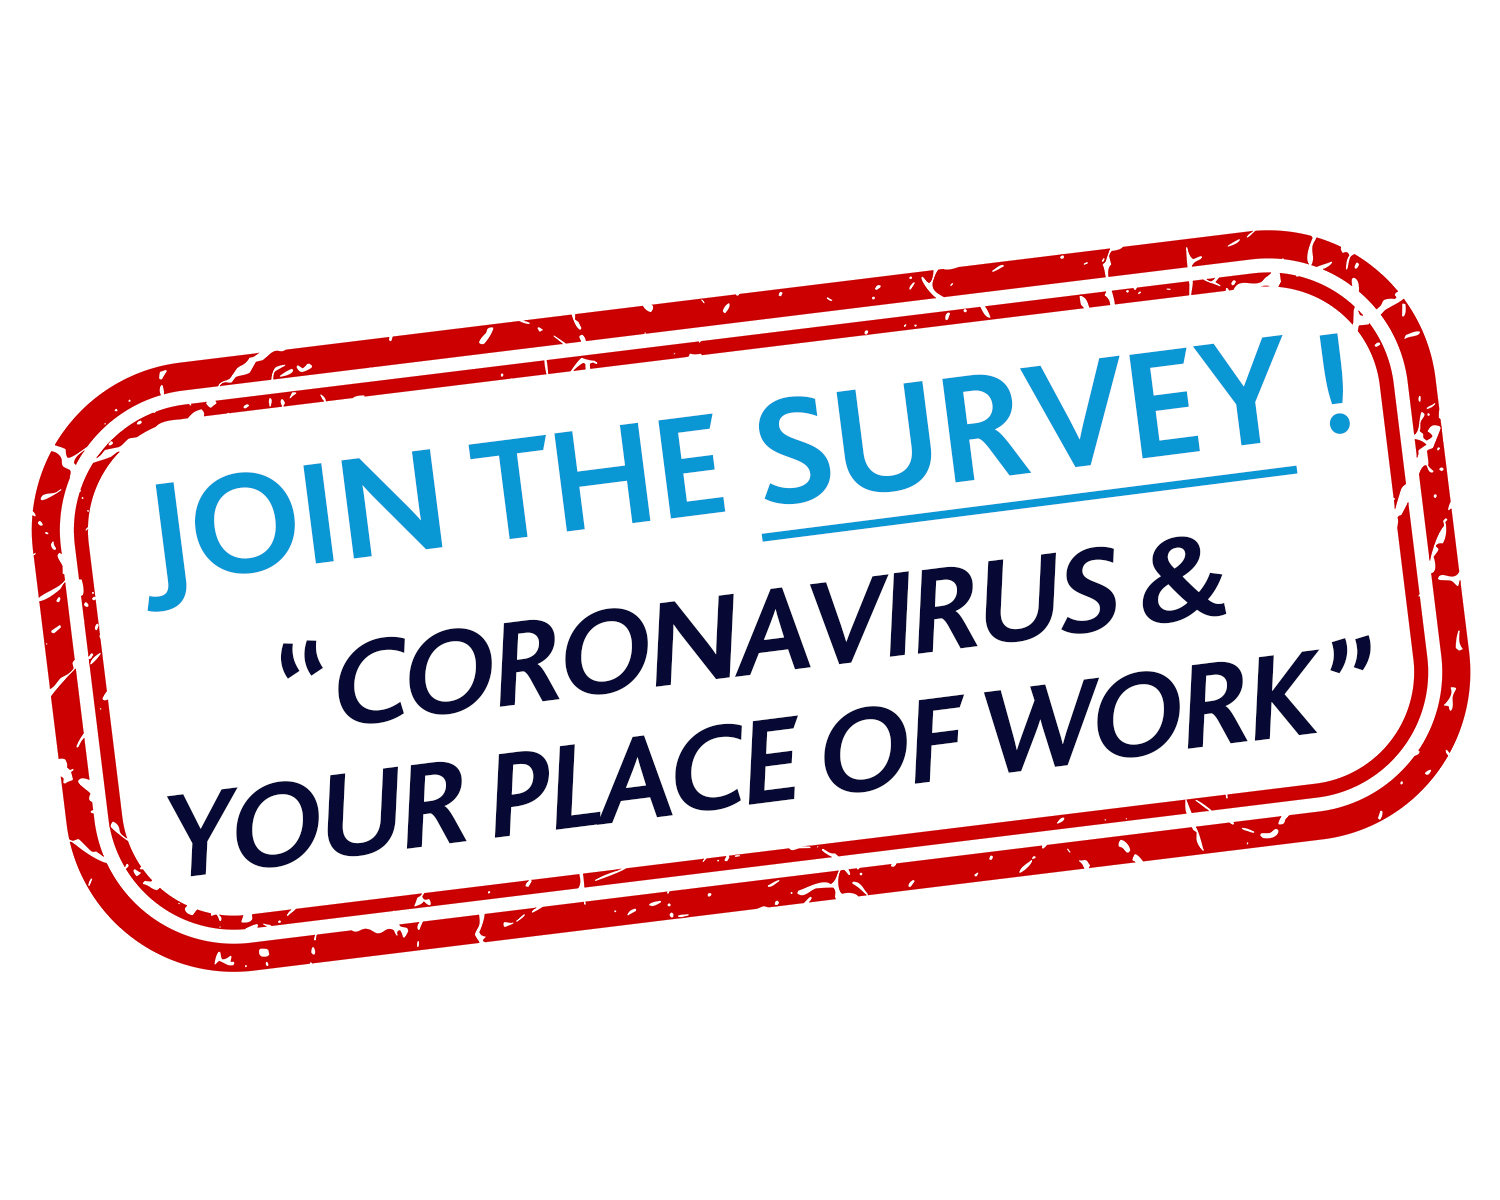 Coronavirus employee survey uk employees